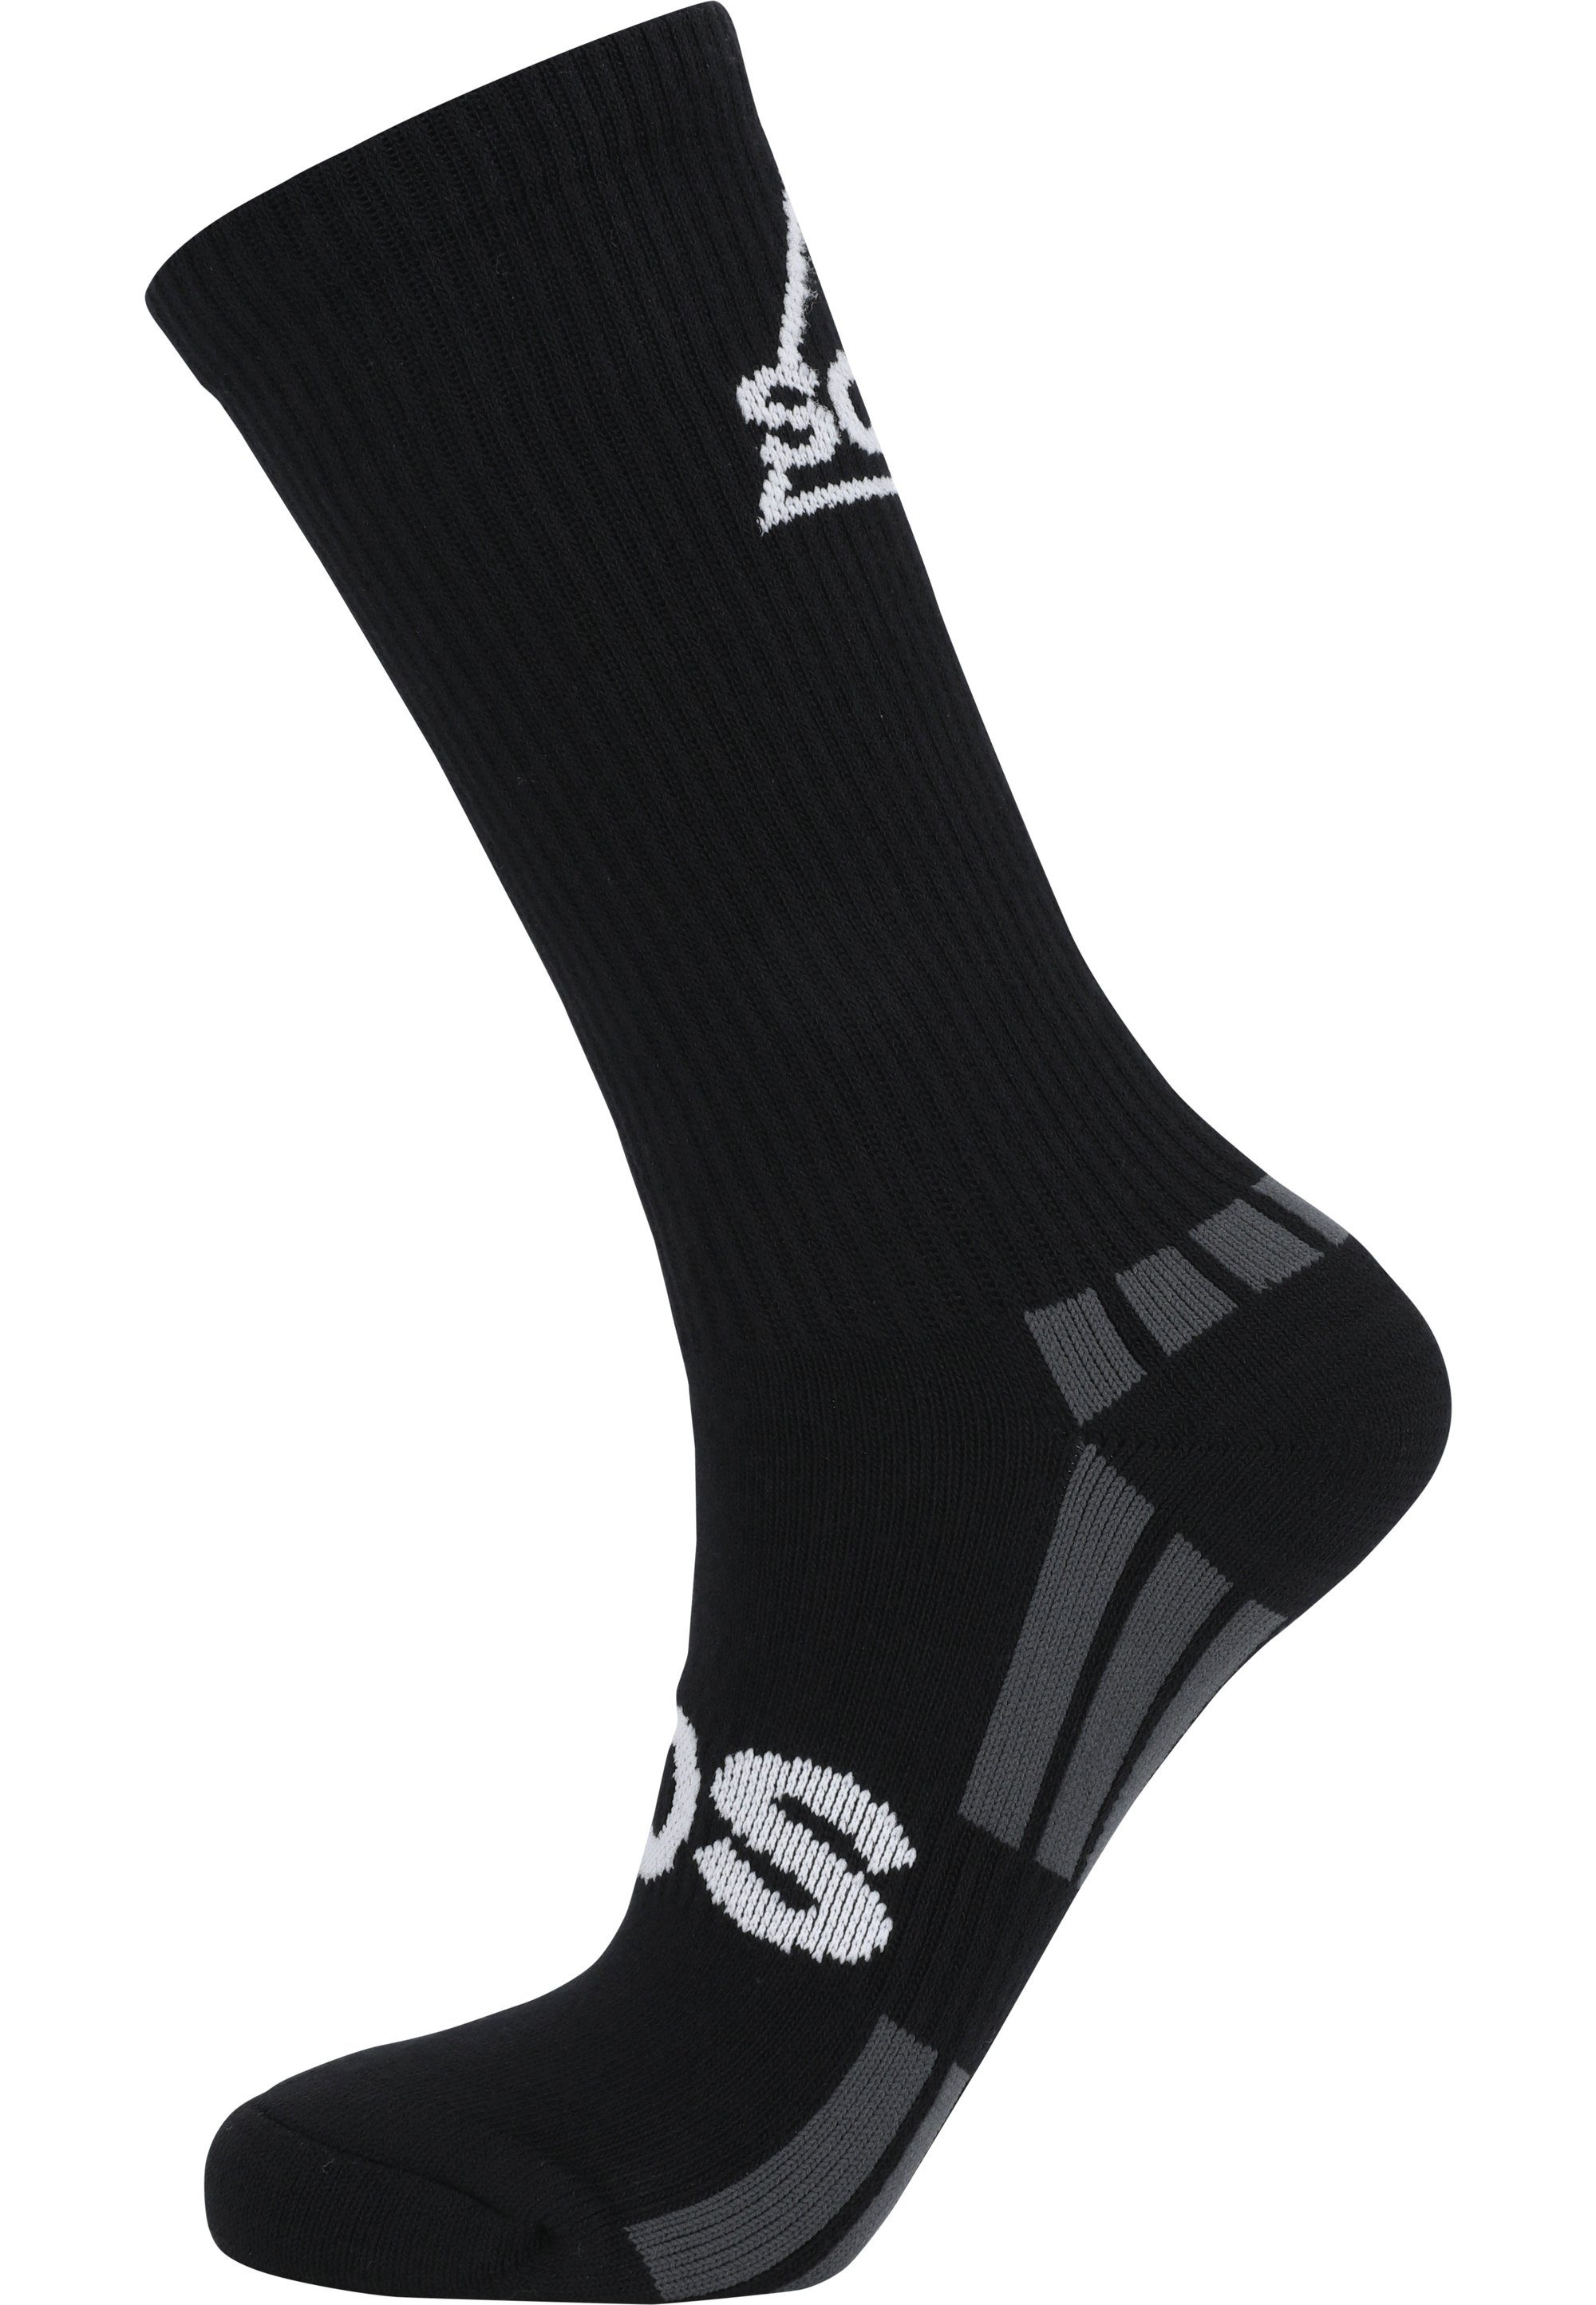 SOS Socken Levi aus weichem Material | Trainingshosen